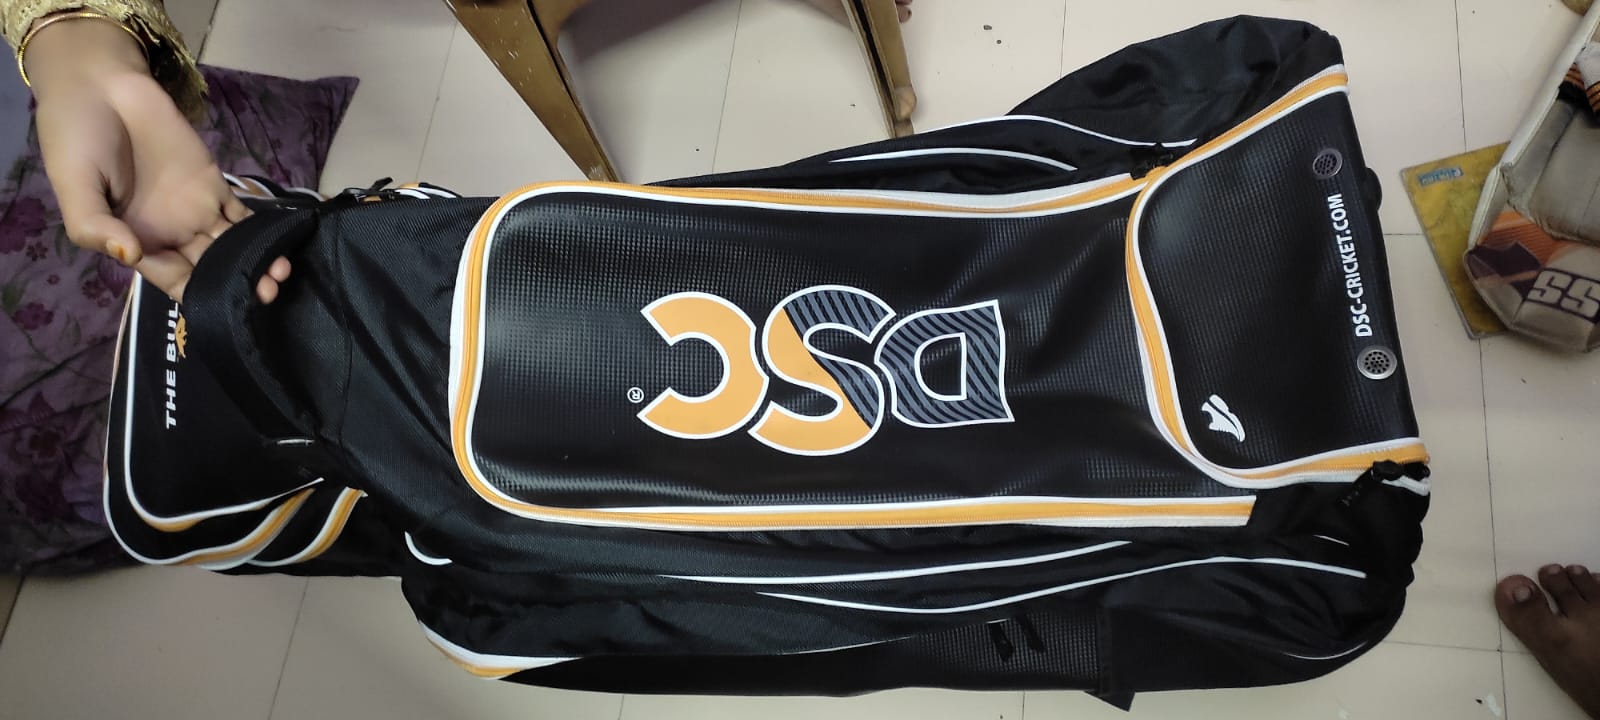 DSC Krunch JUNIOR Duffle Cricket Kit Bag .